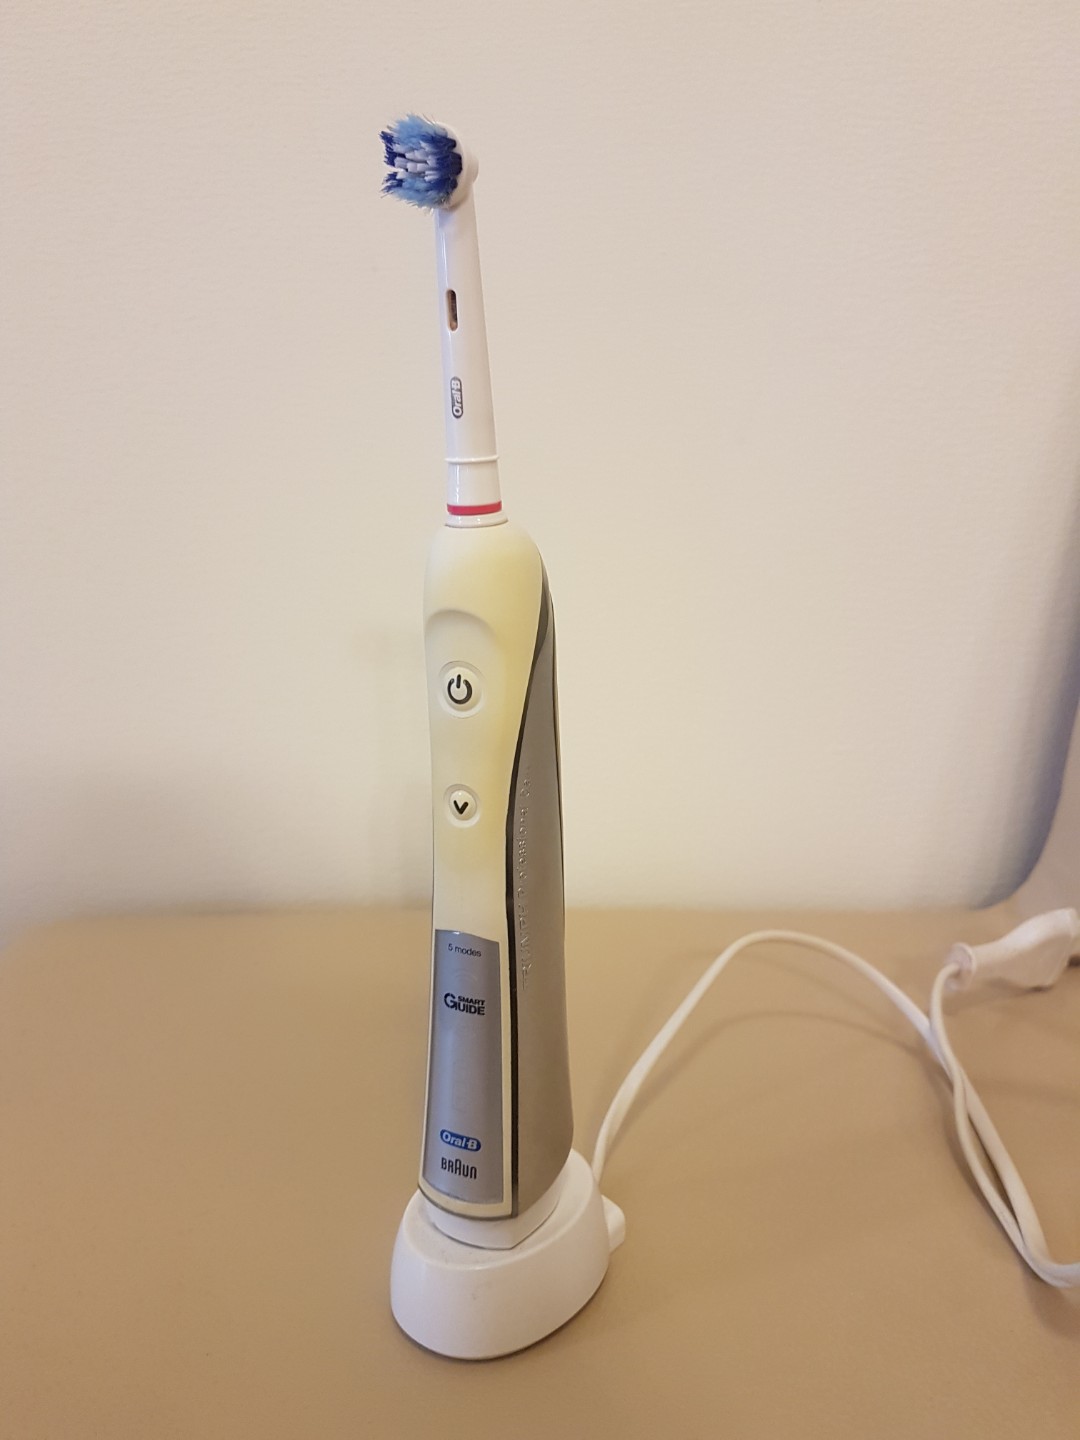 Braun Oral B Triumph Professional Care Electric Toothbrush